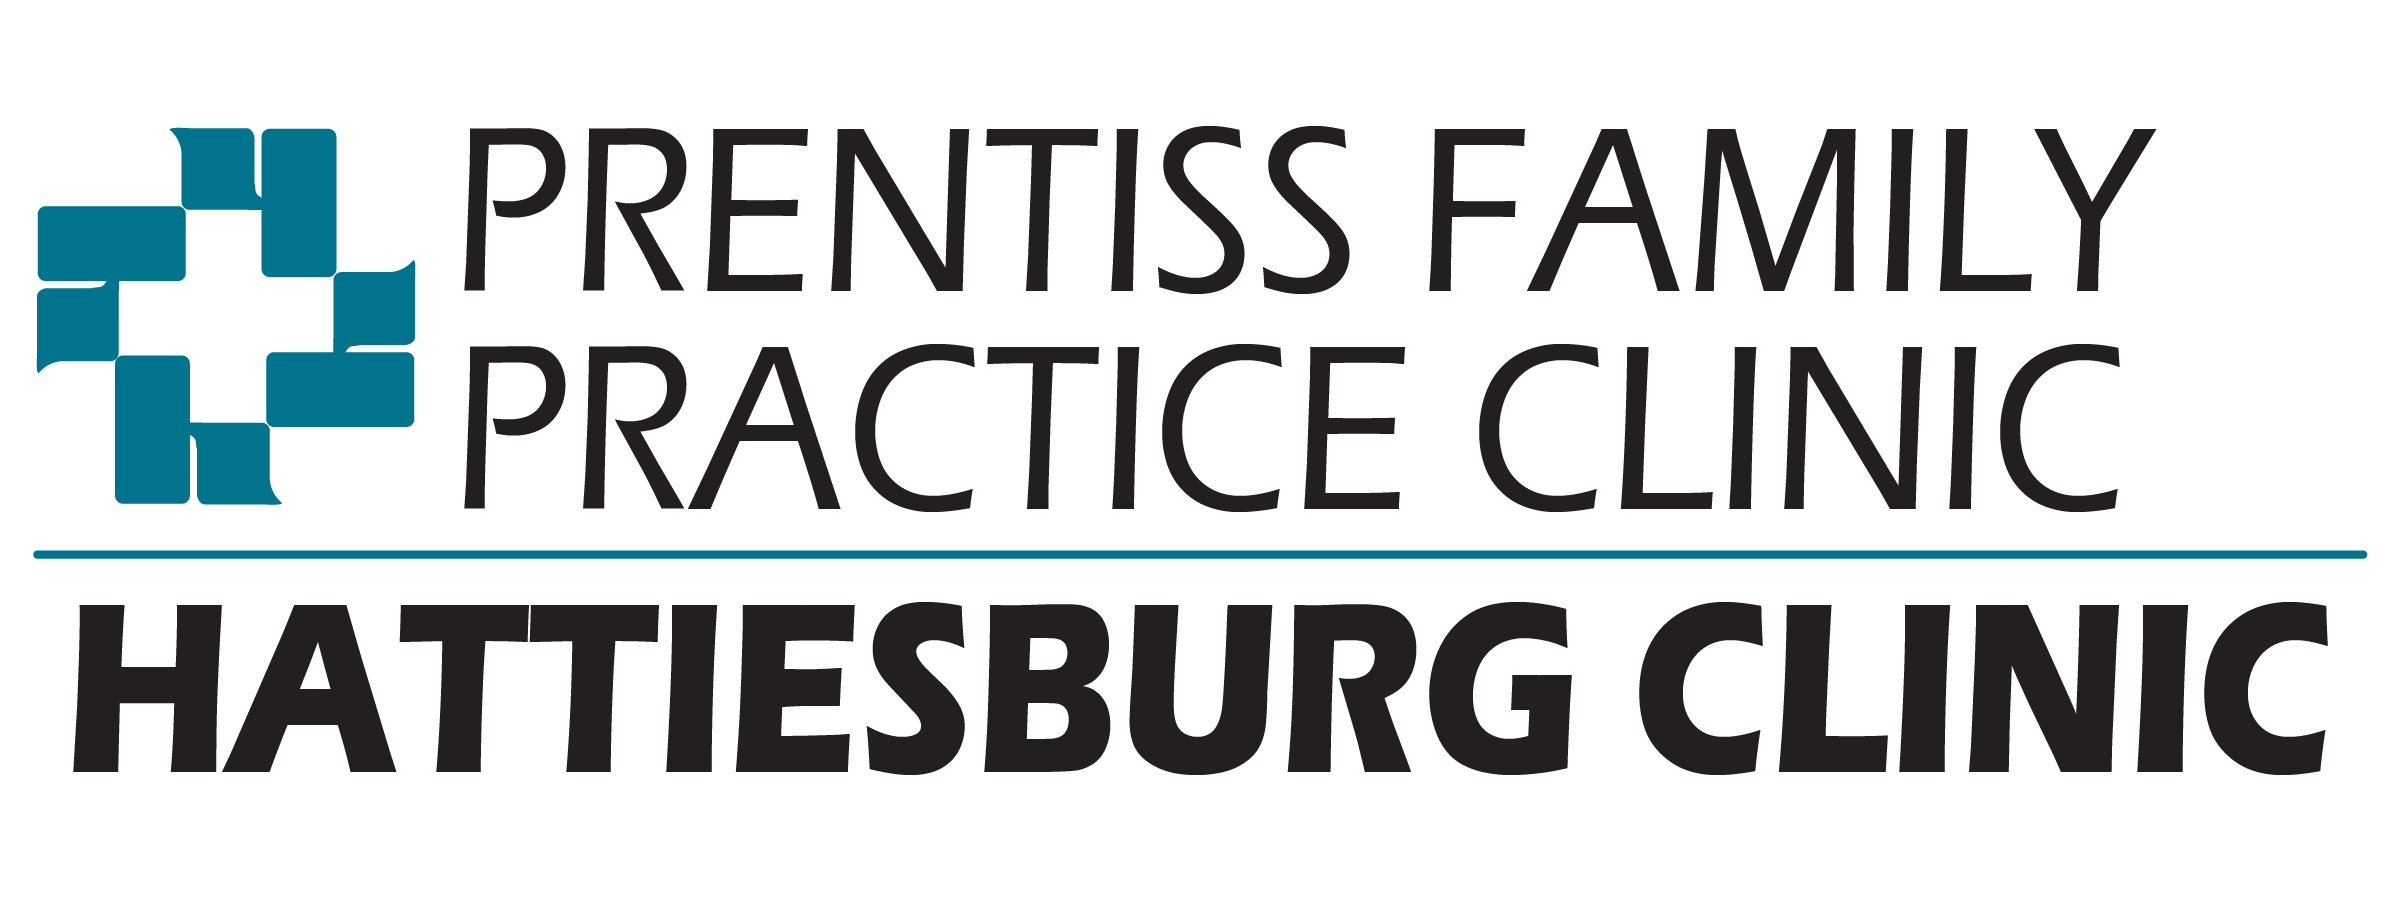 Prentiss Family Practice Clinic logo